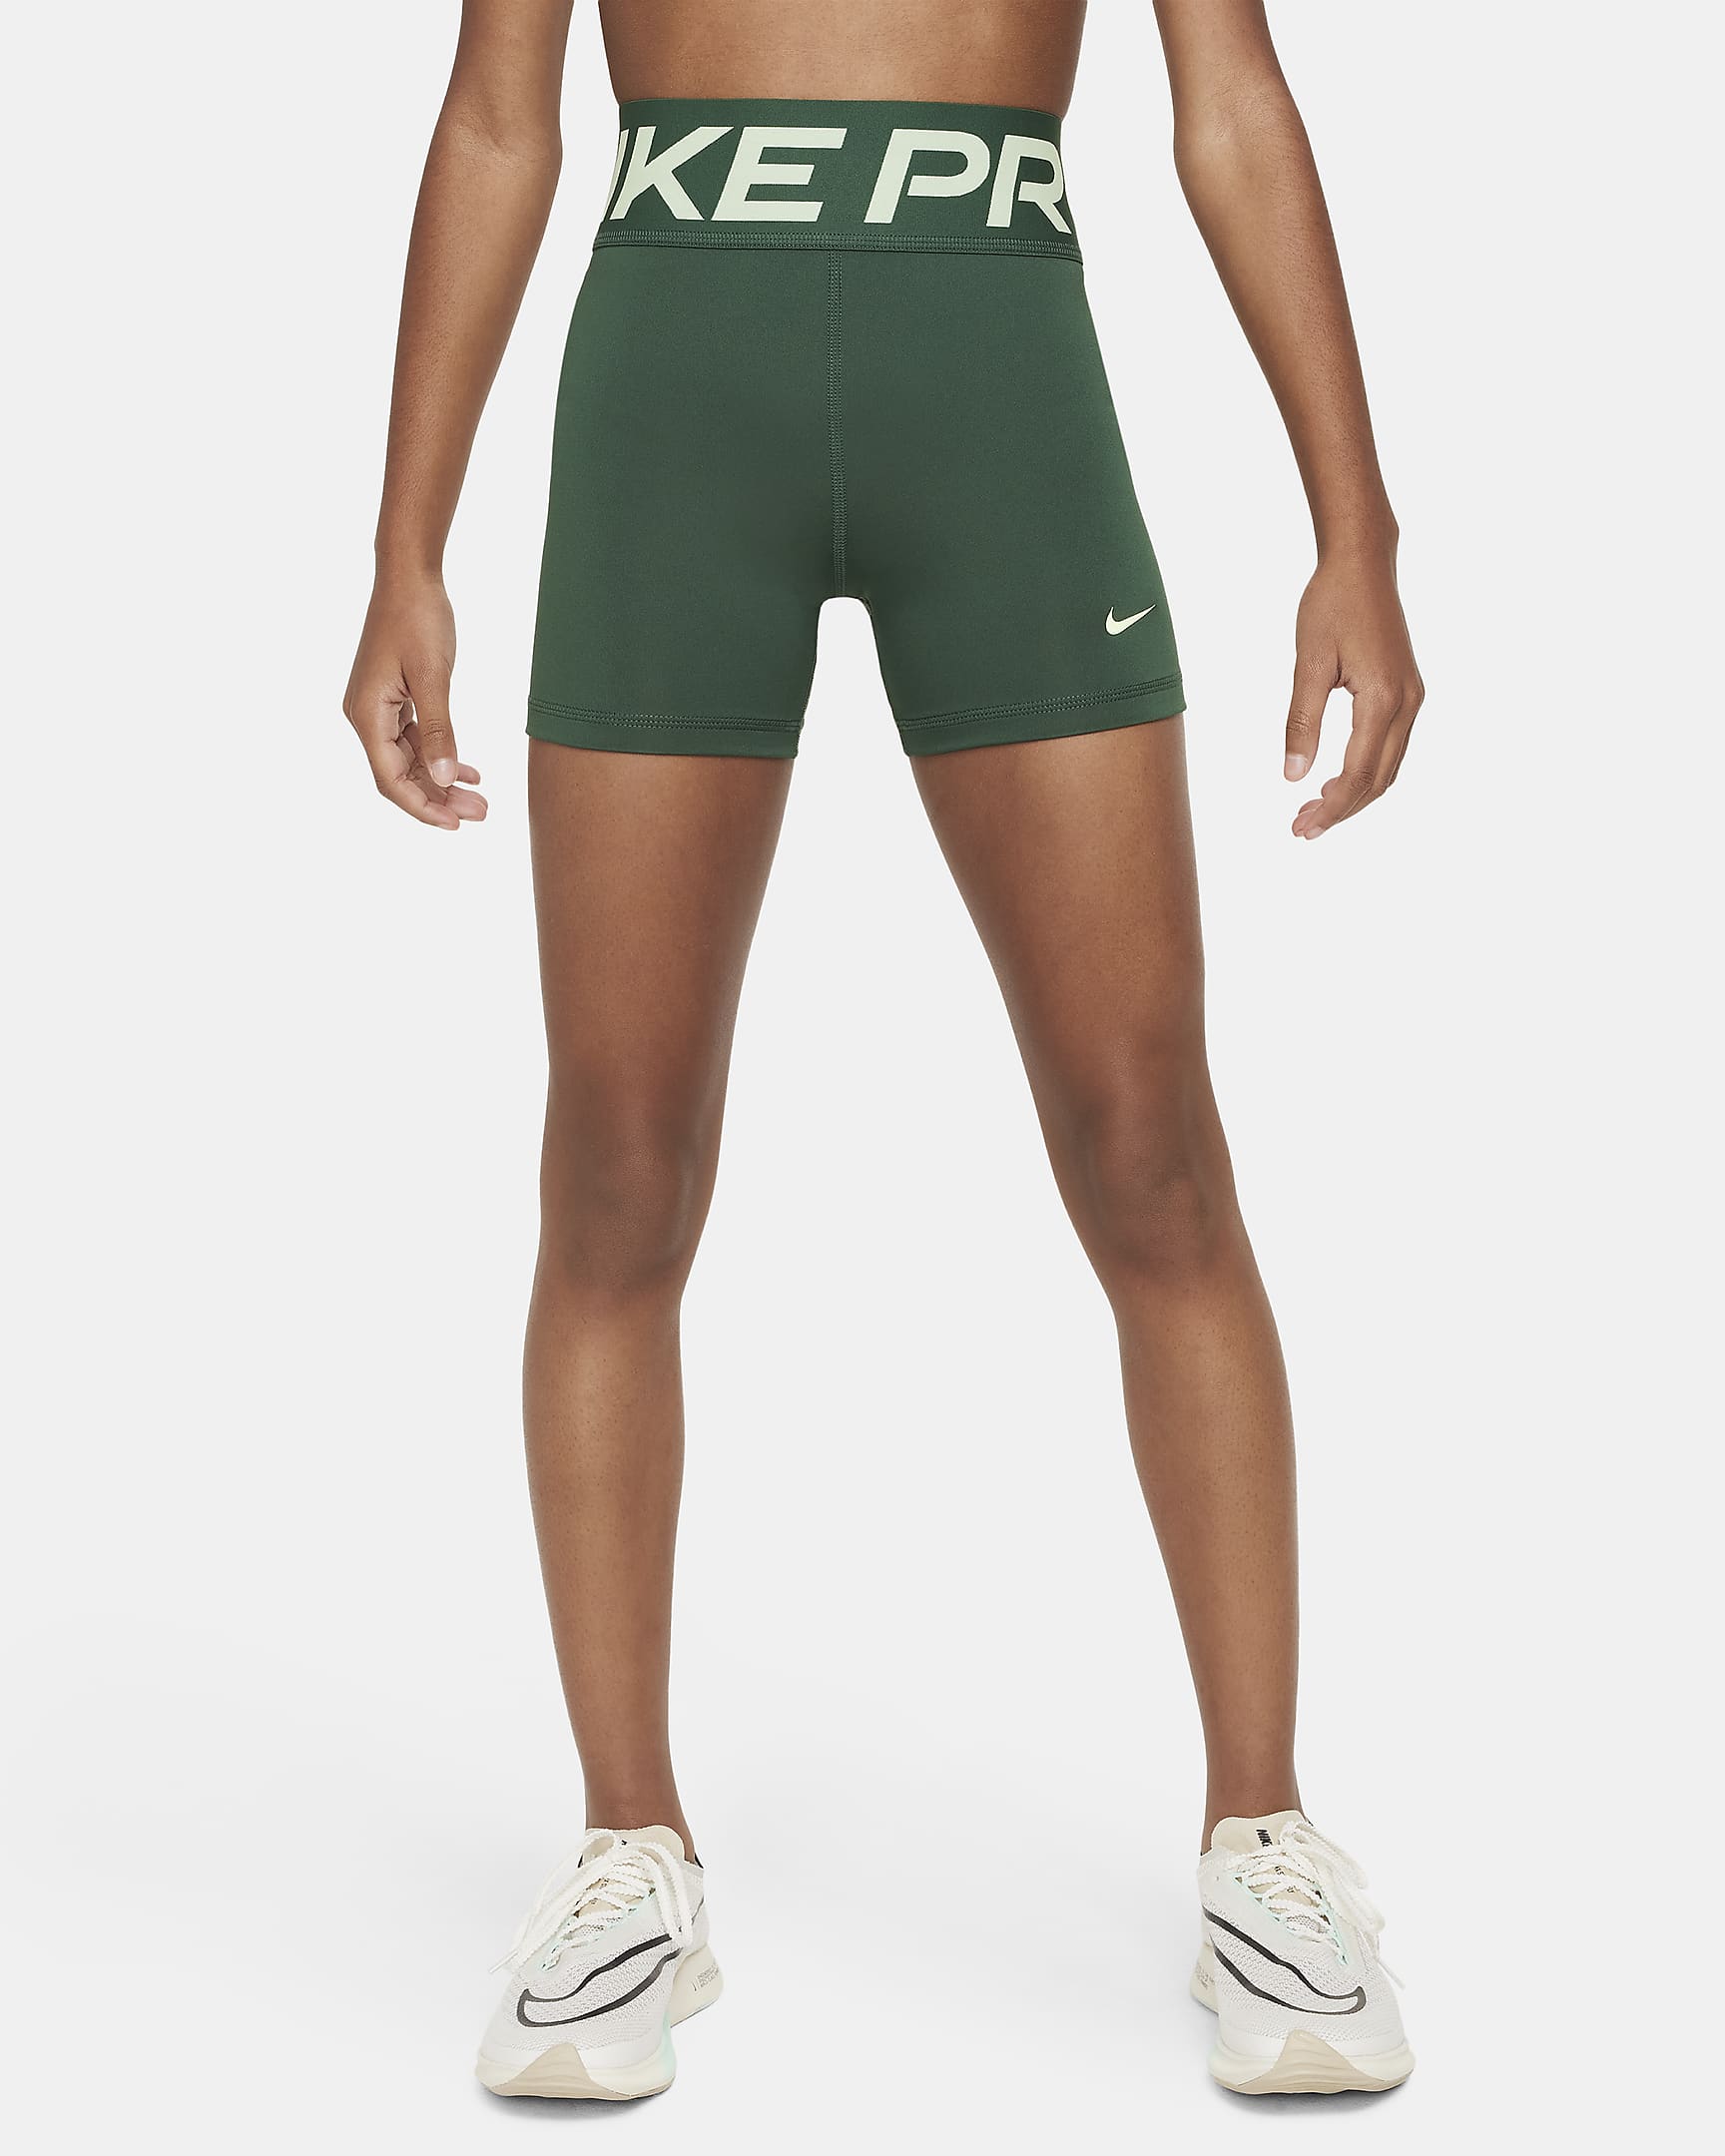 Nike Pro Girls' Dri-FIT Shorts - Fir/Barely Volt